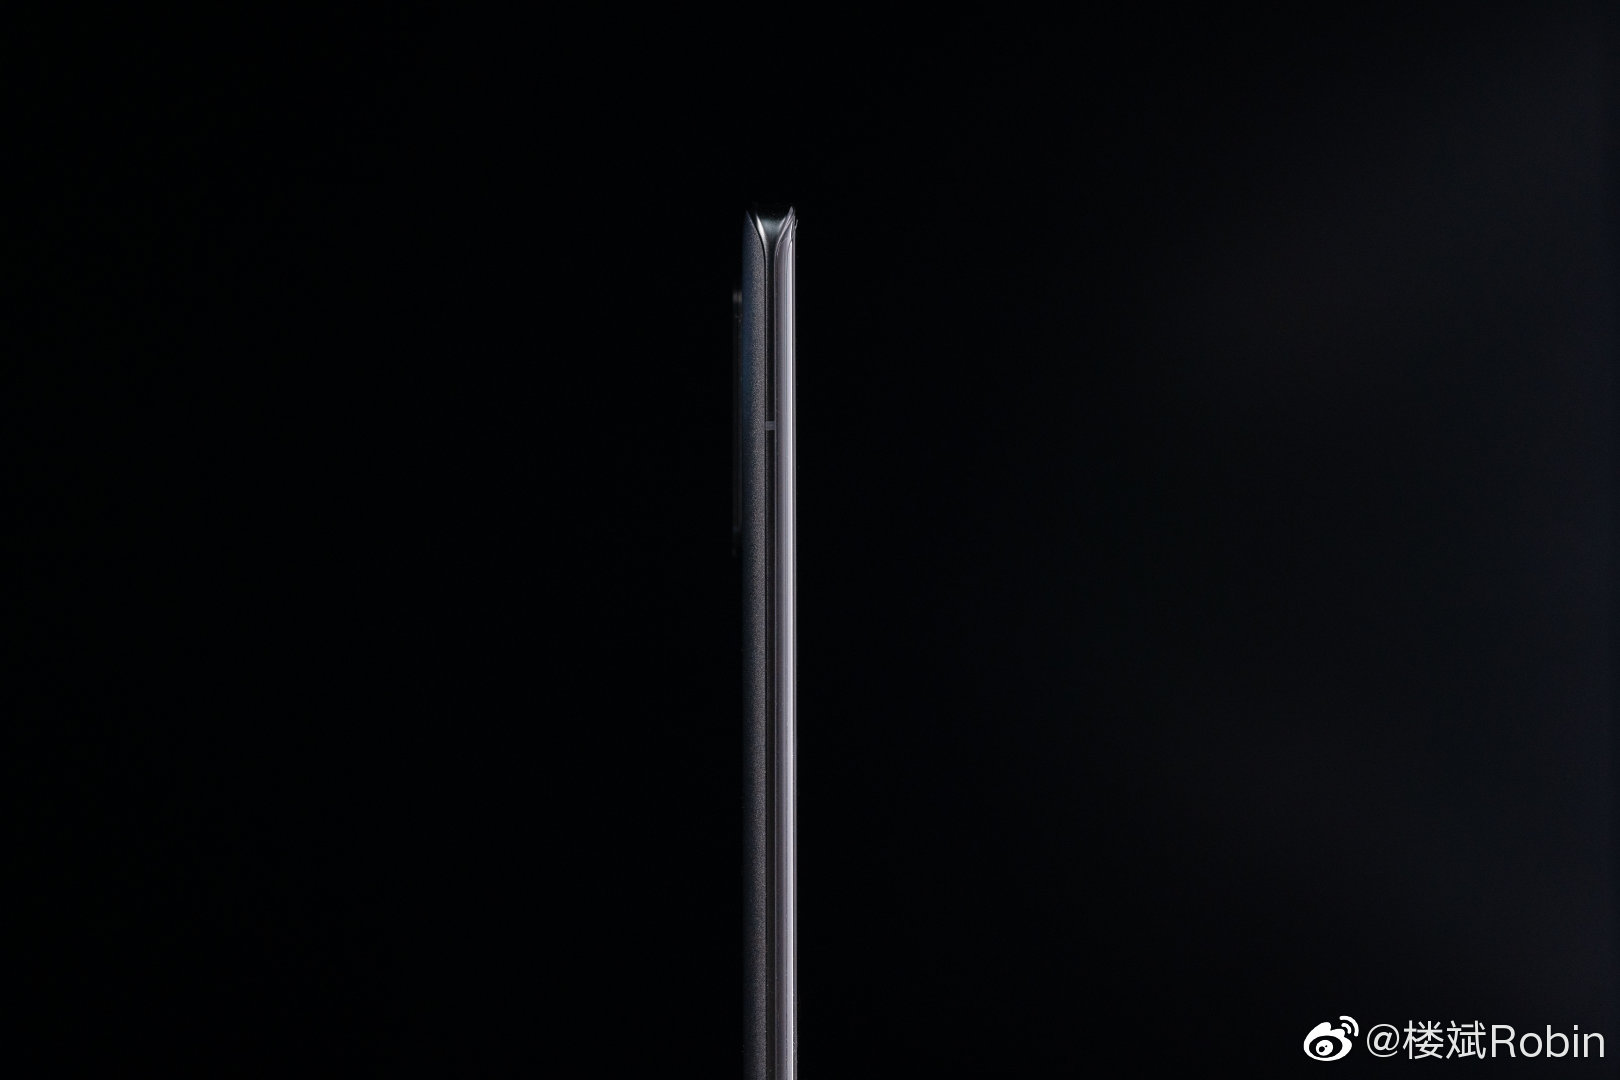  Xiaomi Civi: еще больше живых фото и видео Xiaomi  - teper_i_v_chernom_bolshe_zhivyh_foto_i_video_xiaomi_civi__picture5_1